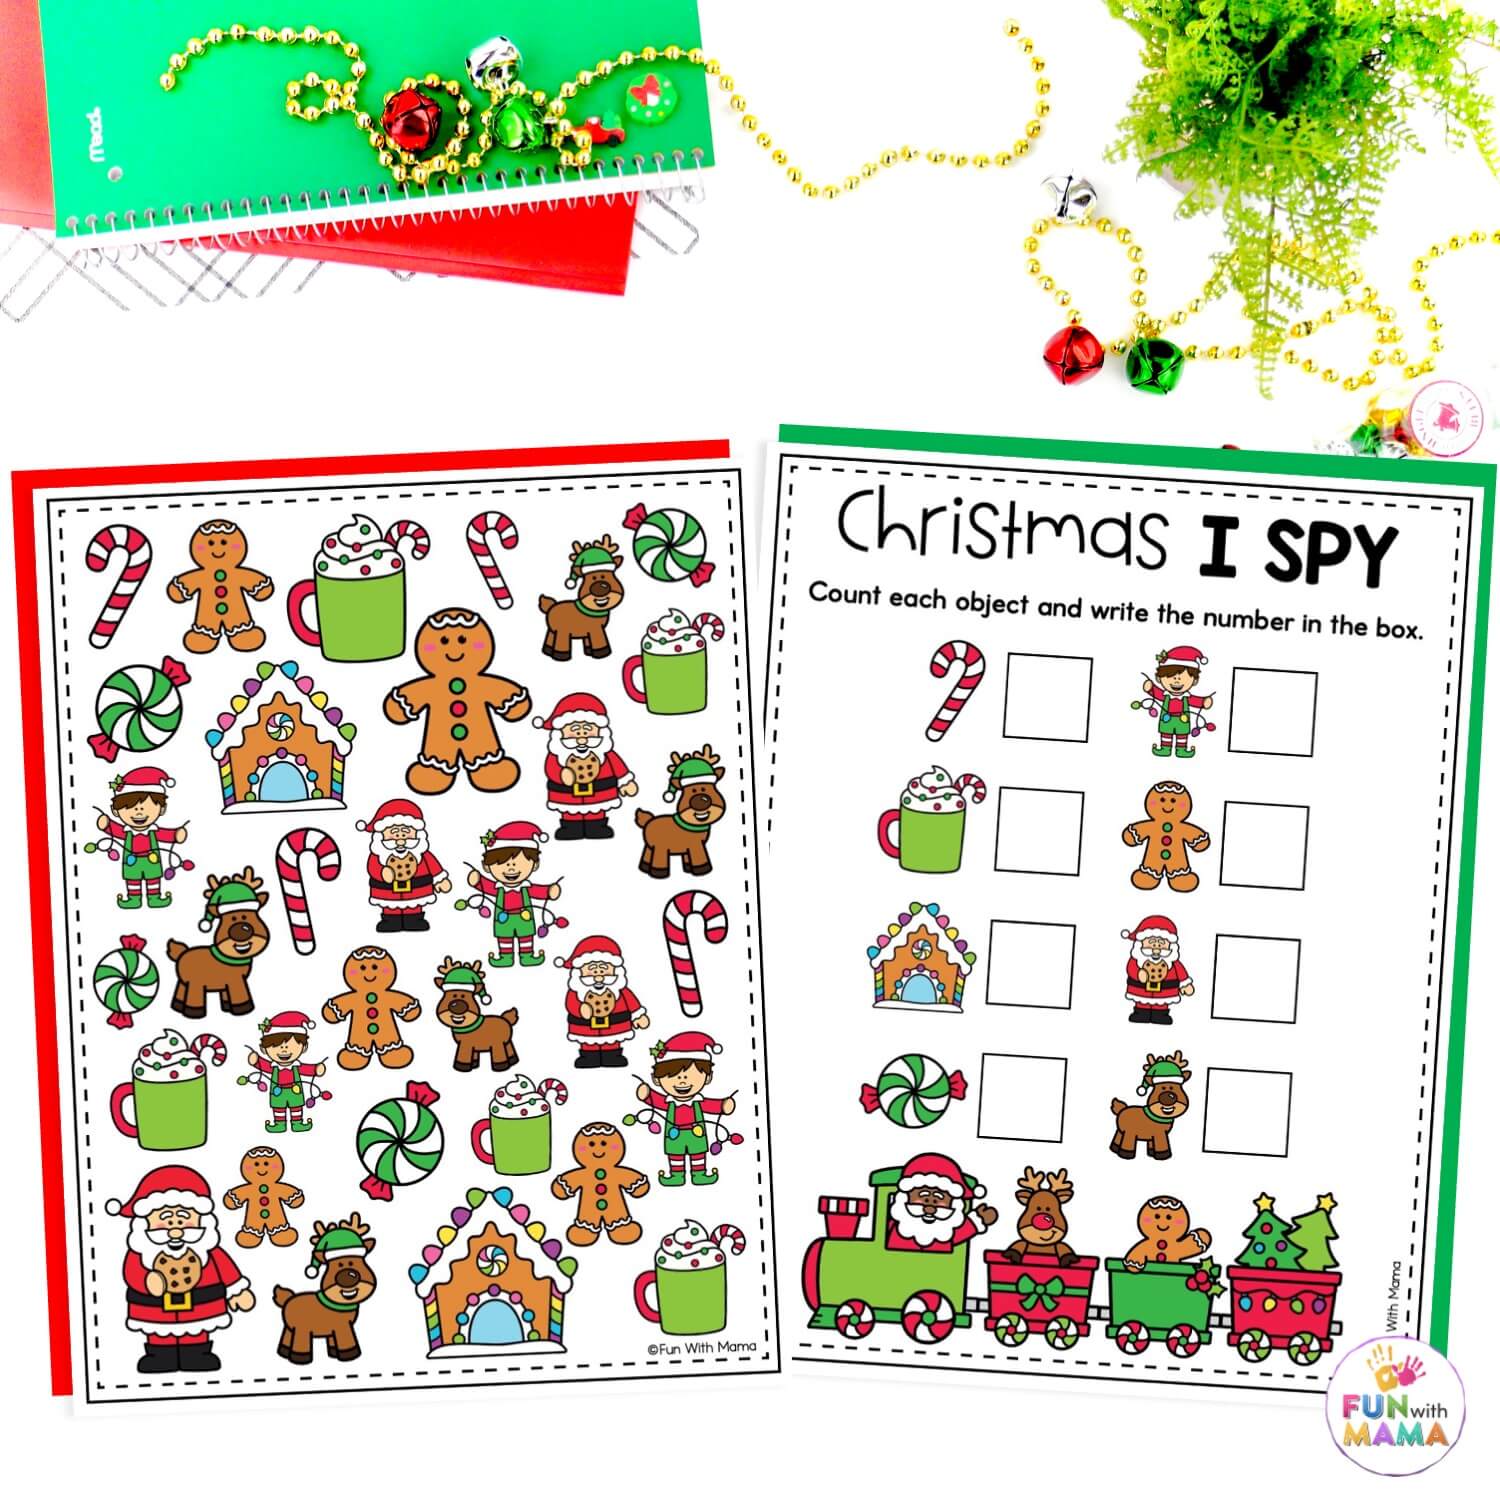 christmas-i-spy-game-for-kids-easy